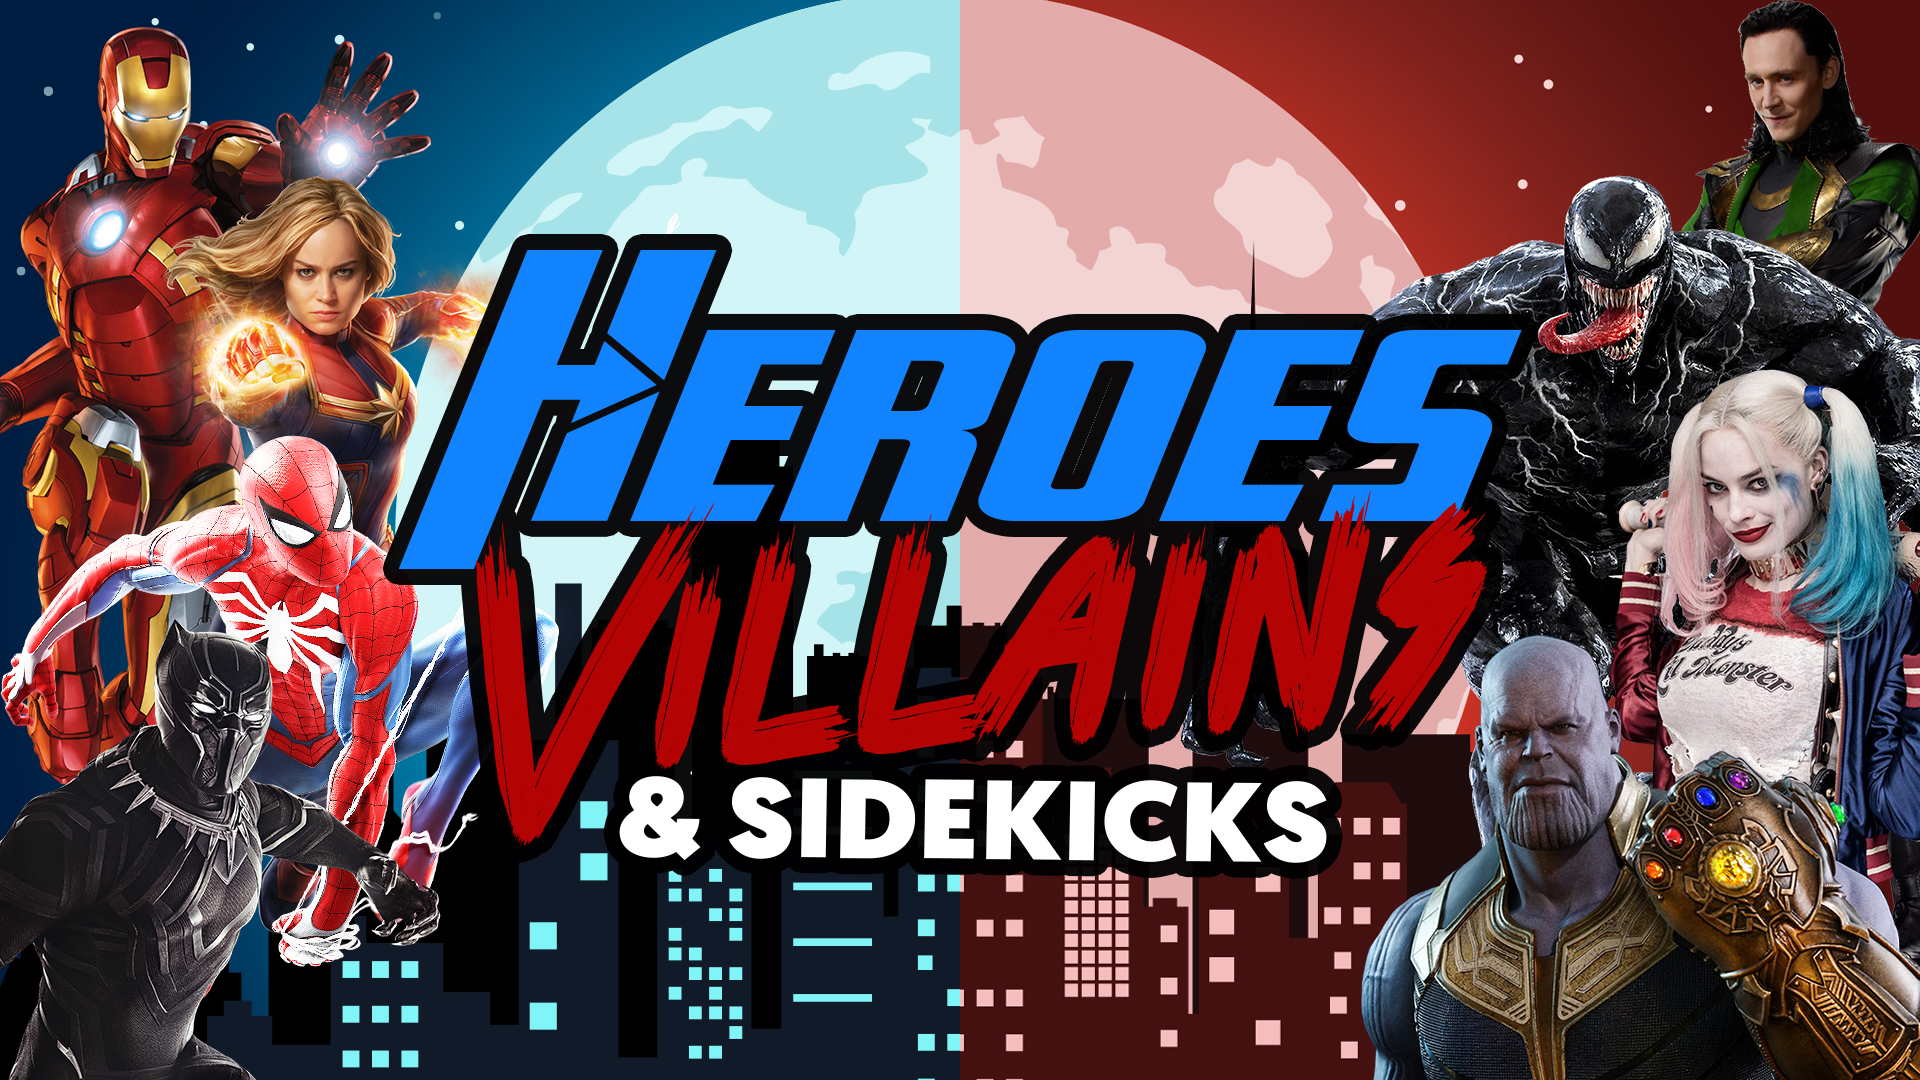   Heroes, Villains, and Sidekicks.